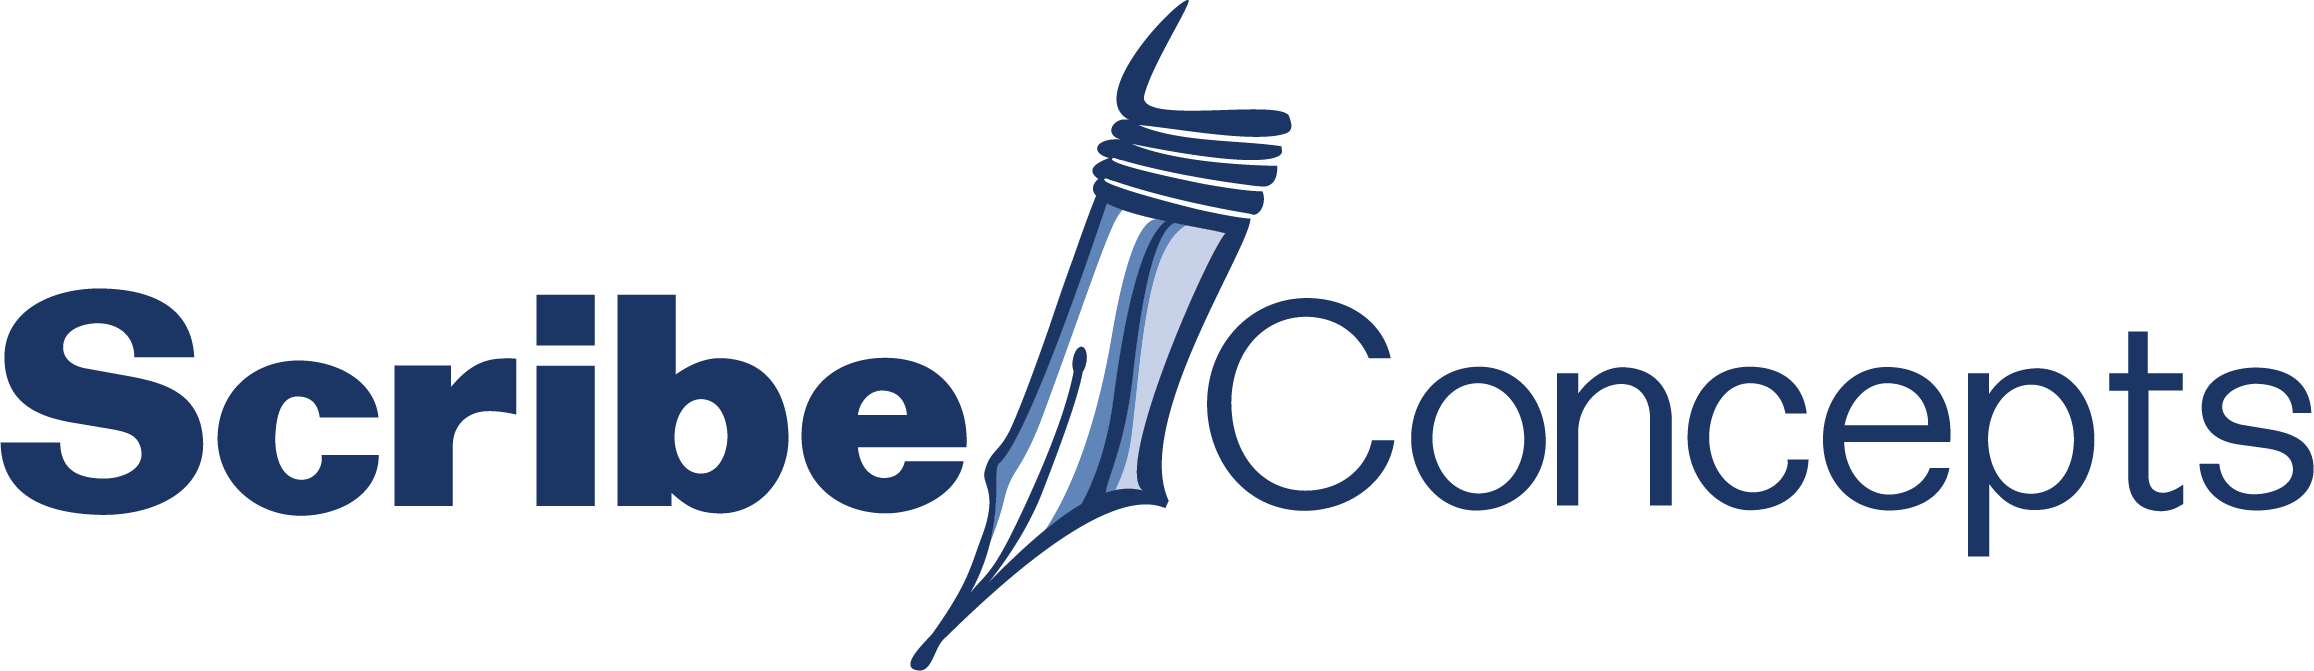 Scribe Logo